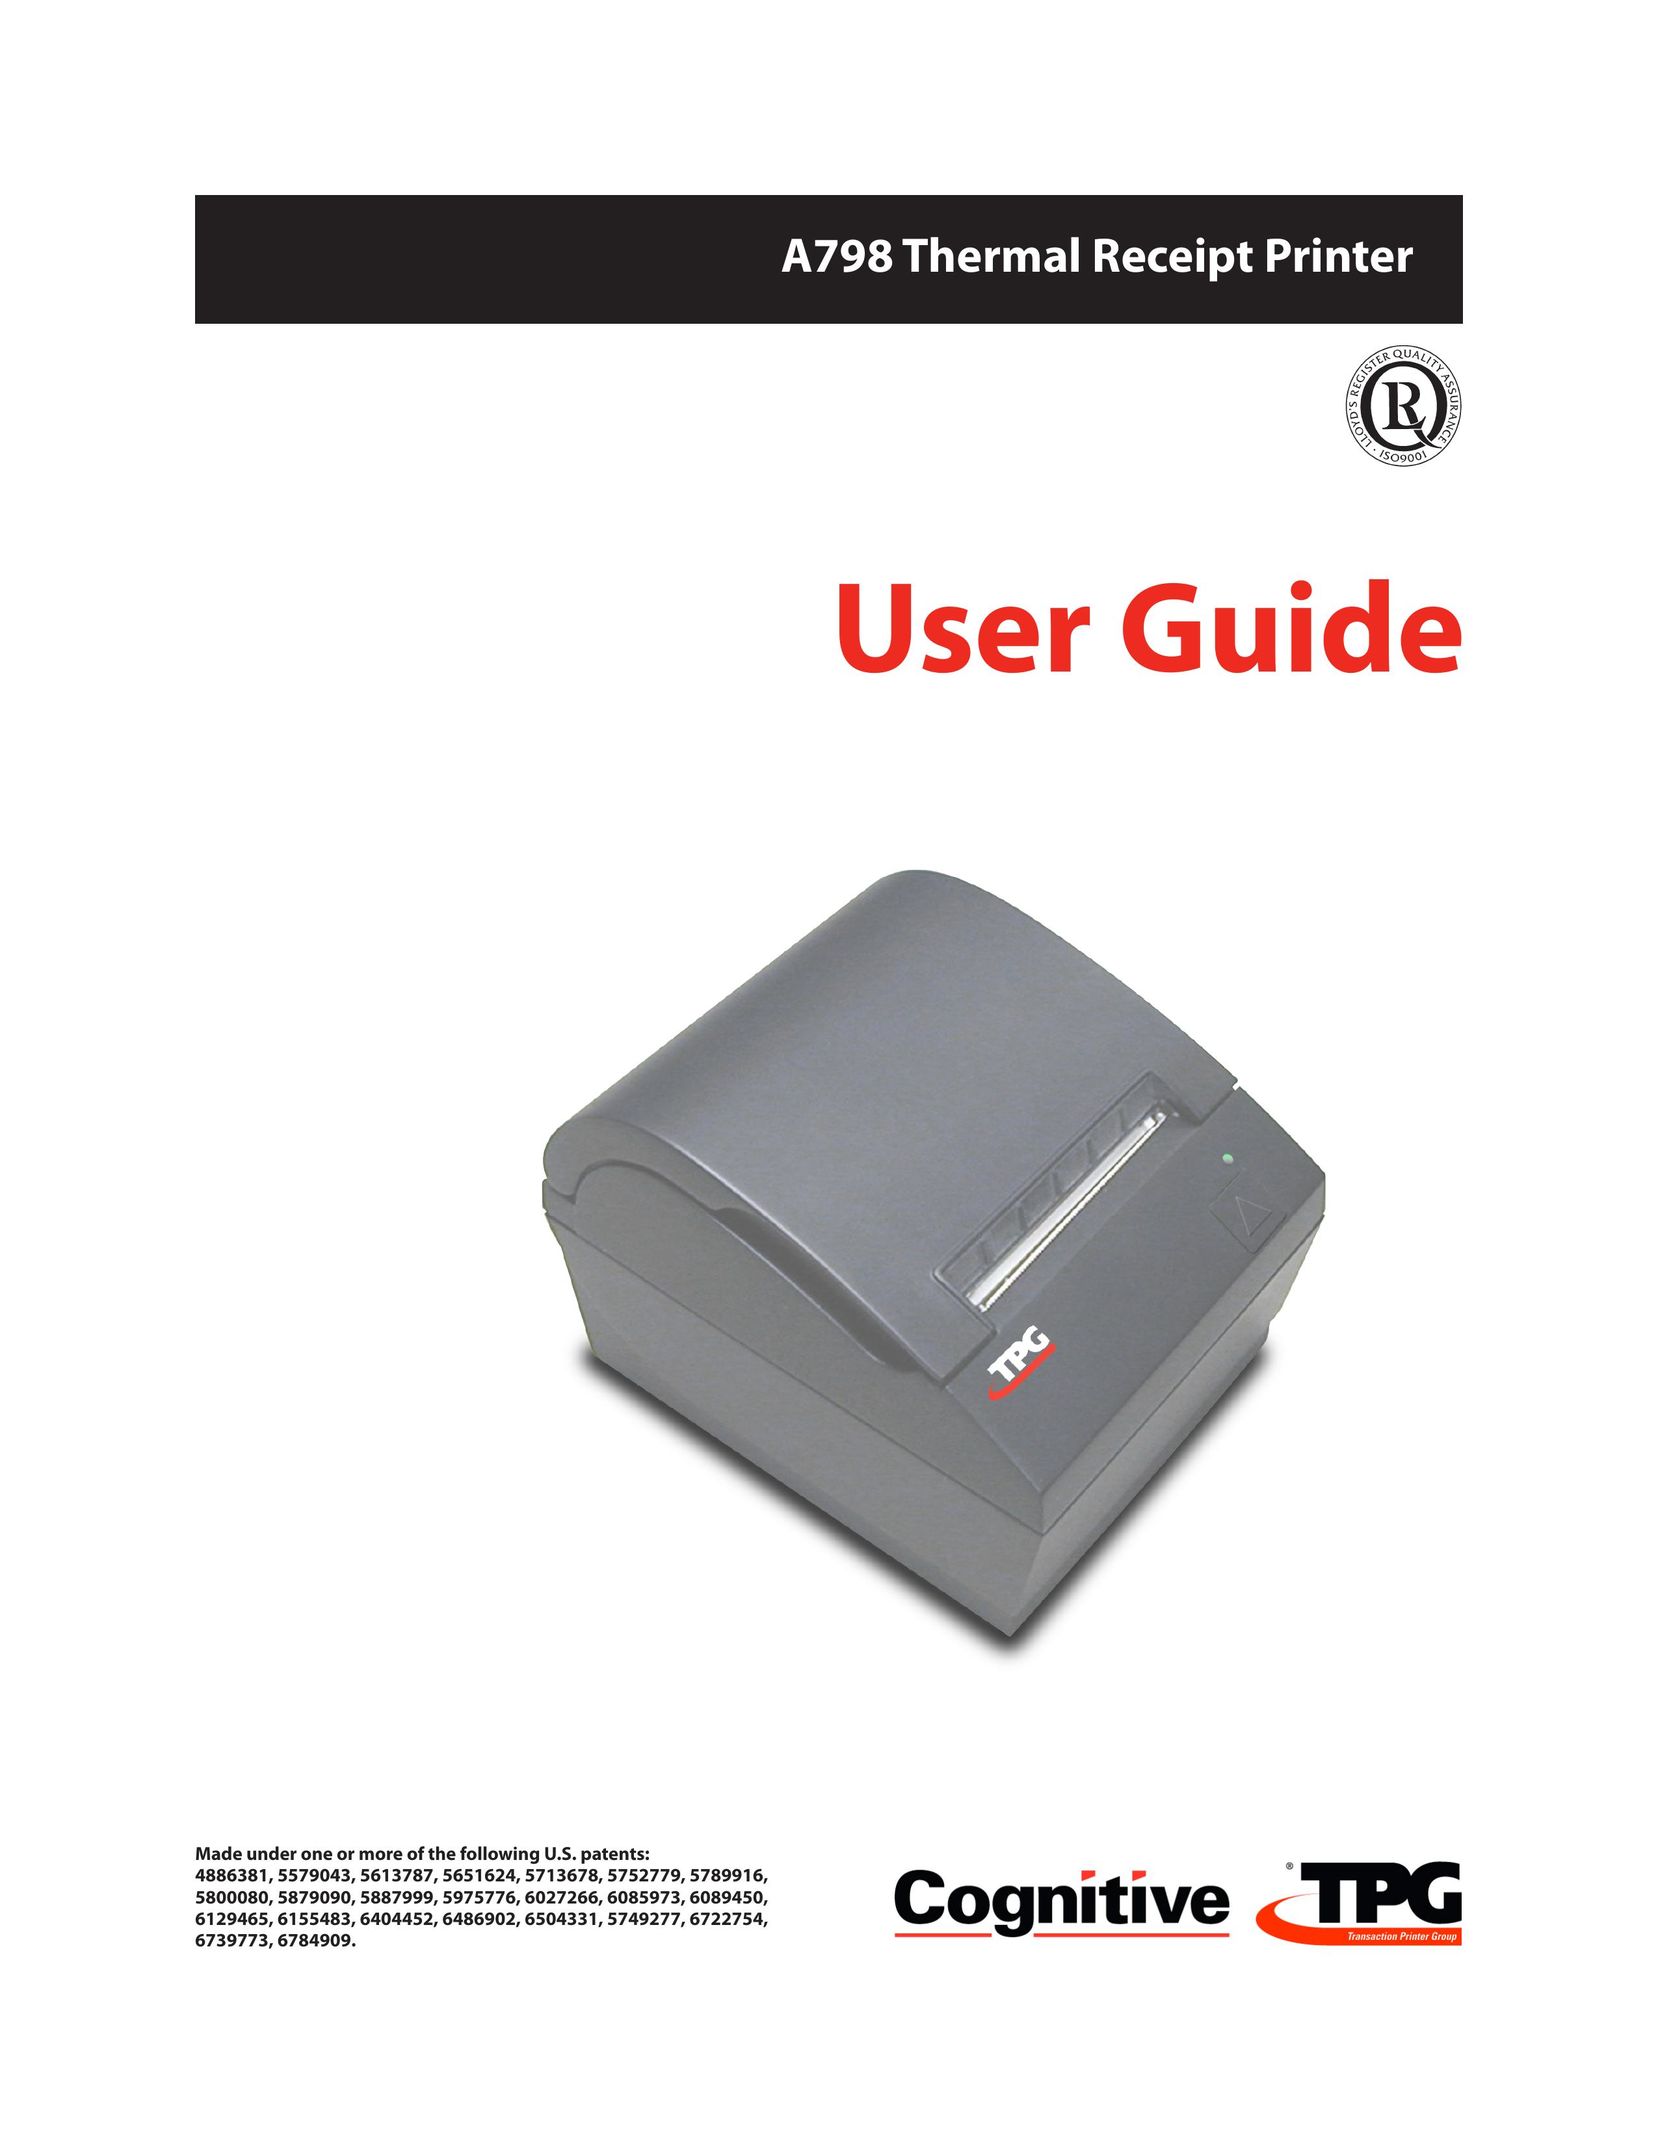 Cognitive Solutions 5752779 Scanner User Manual